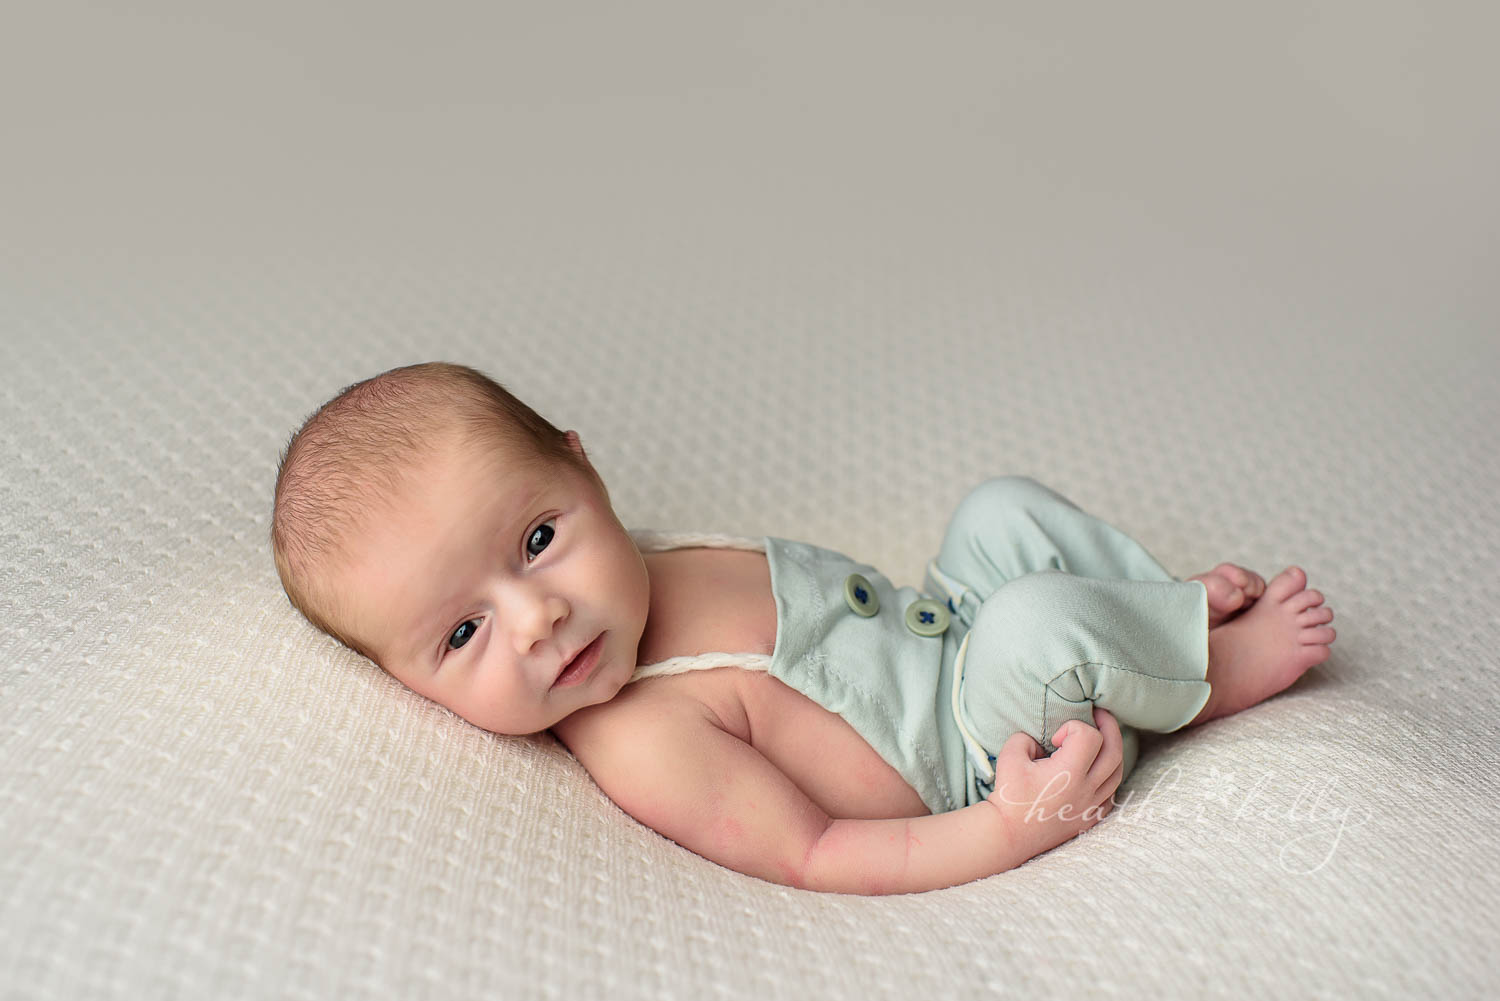 awake newborn boy in cute blue outfit for newborn photo shoot. shelton newborn photography